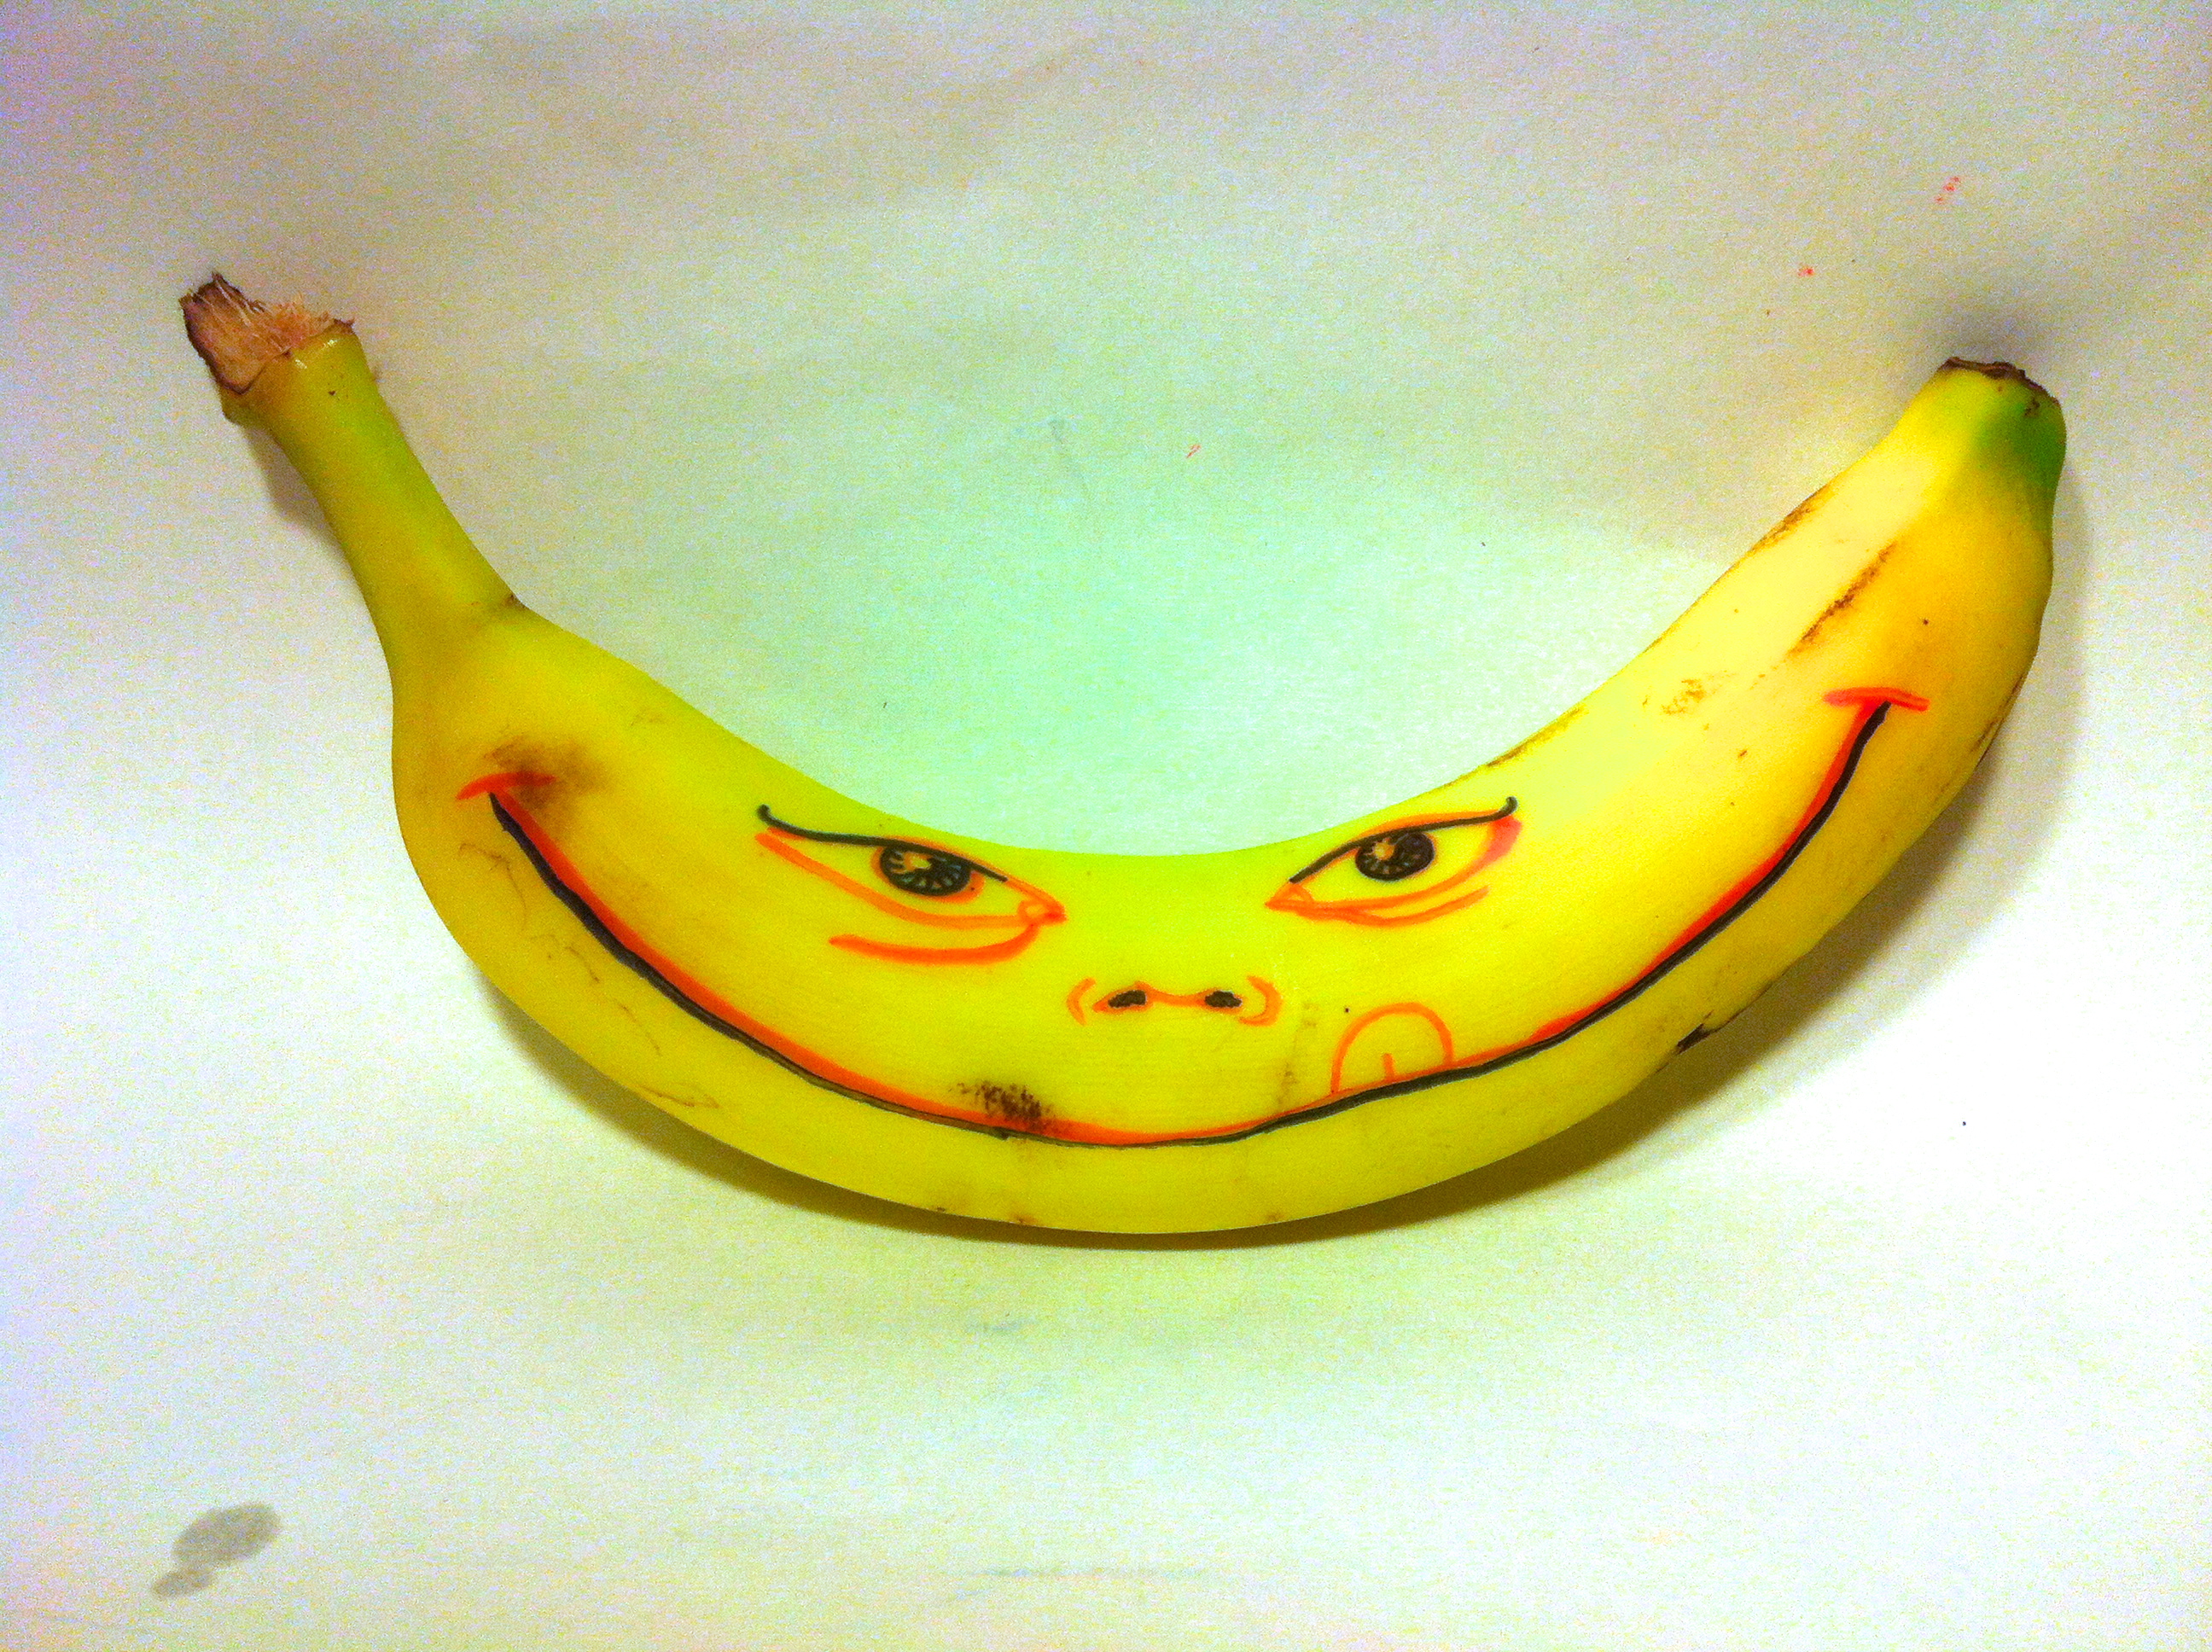 Smiley face drawn on a banana.